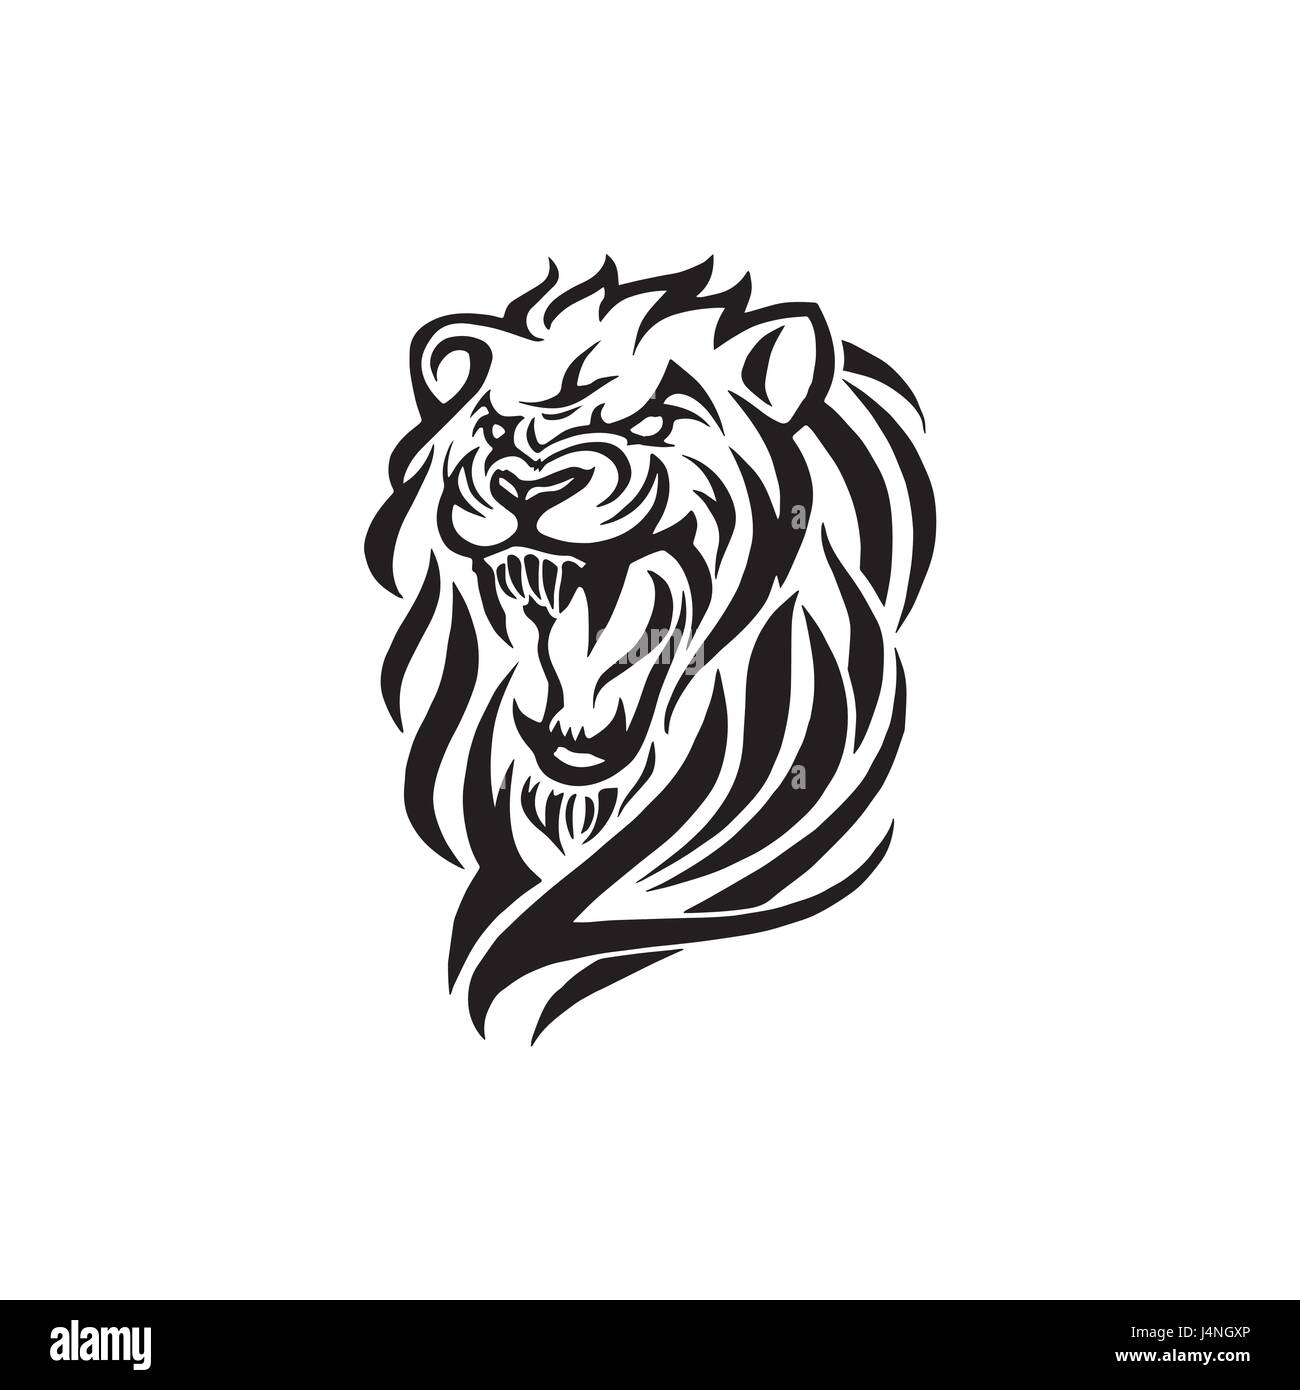 Lion tattoo design Stock Vector